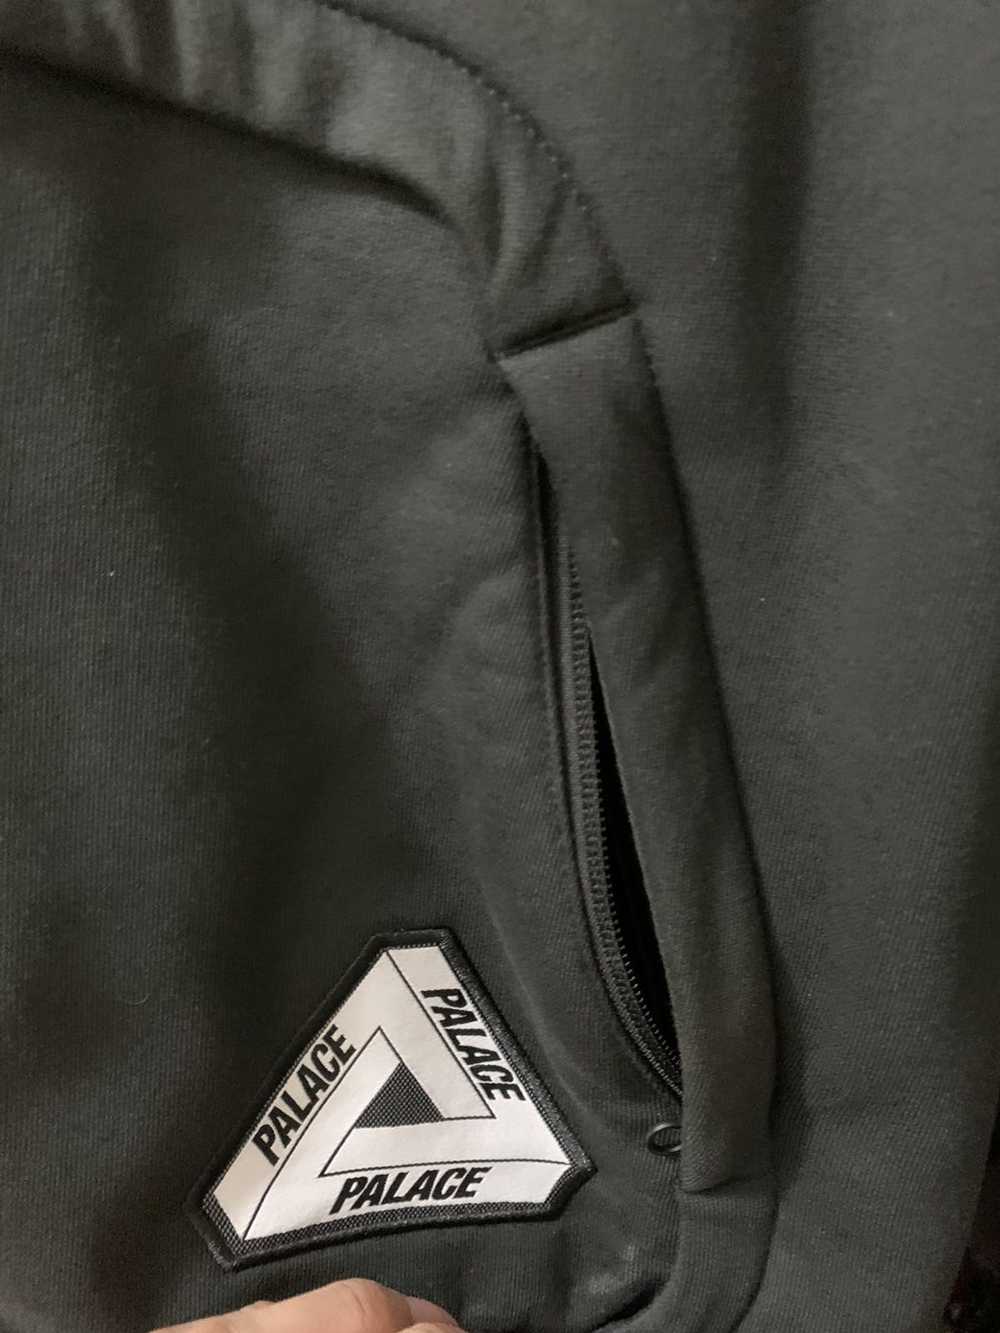 Palace Tri pocket hoodie - image 2